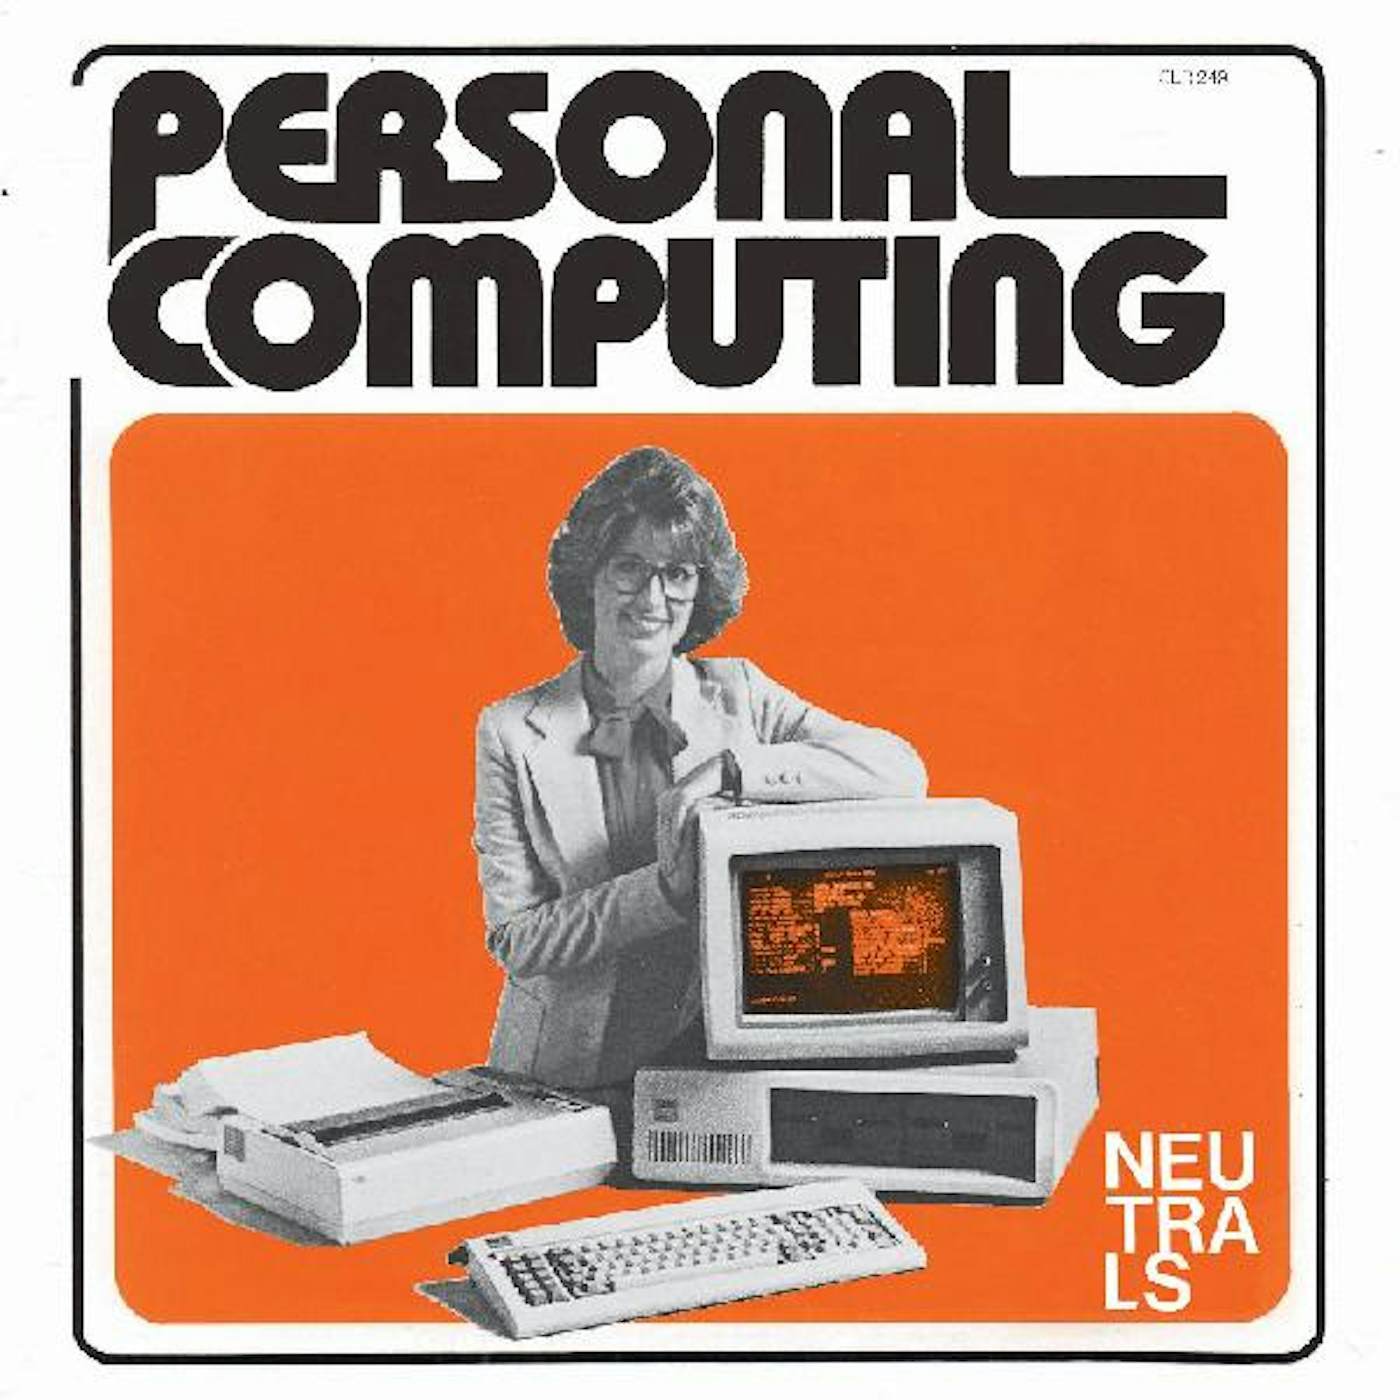 The Neutrals Personal Computing Vinyl Record